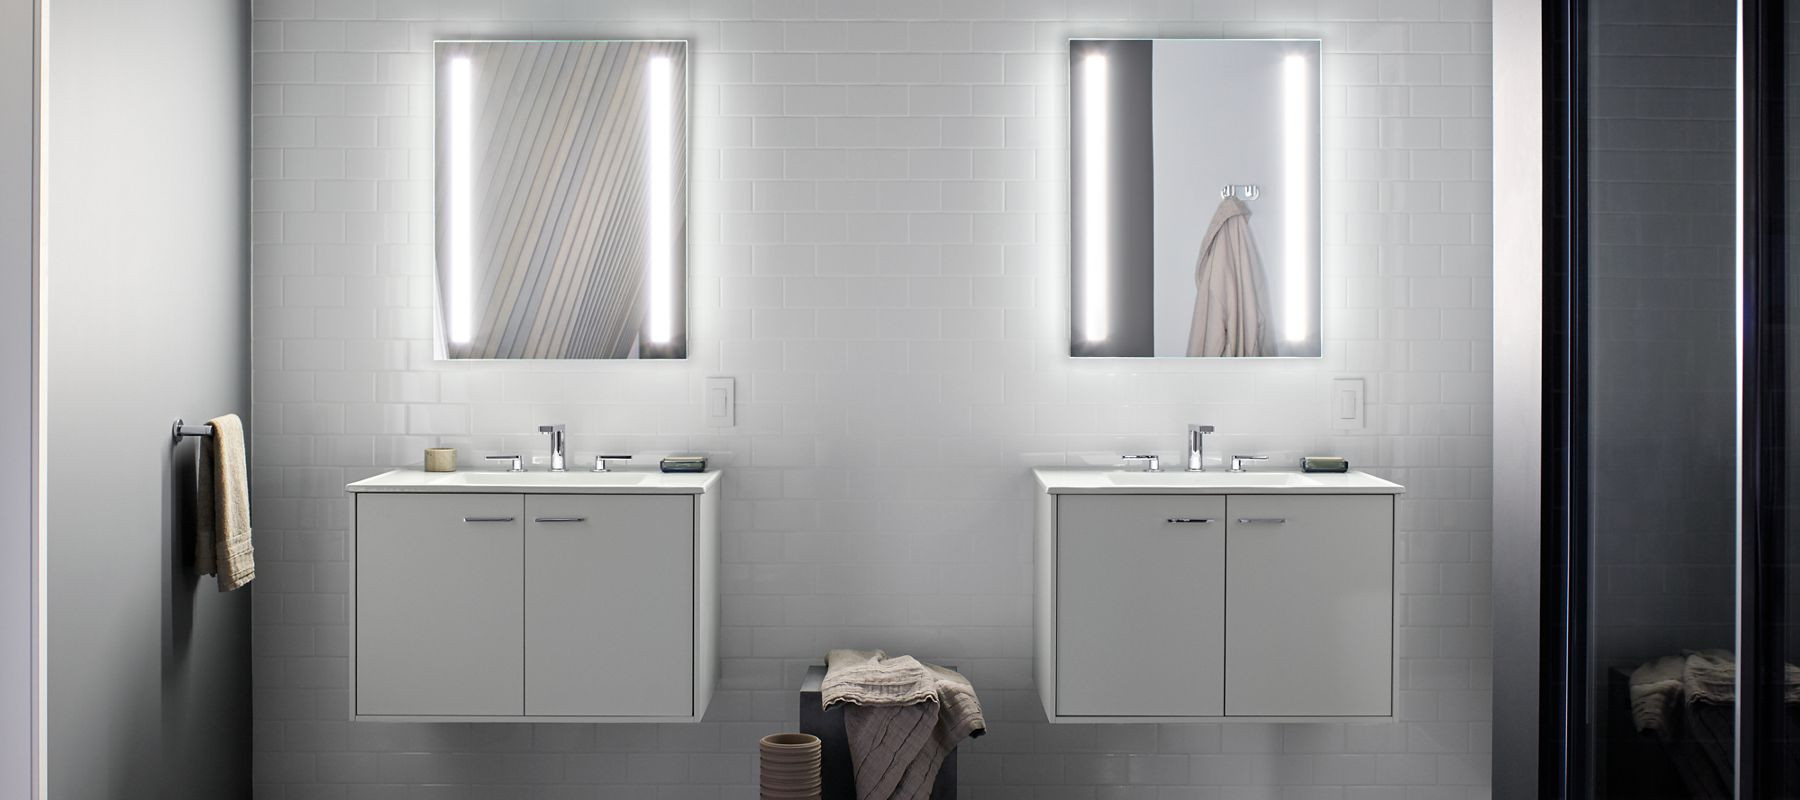 Mirror Cabinet Bathroom
 Bathroom Mirrors Bathroom